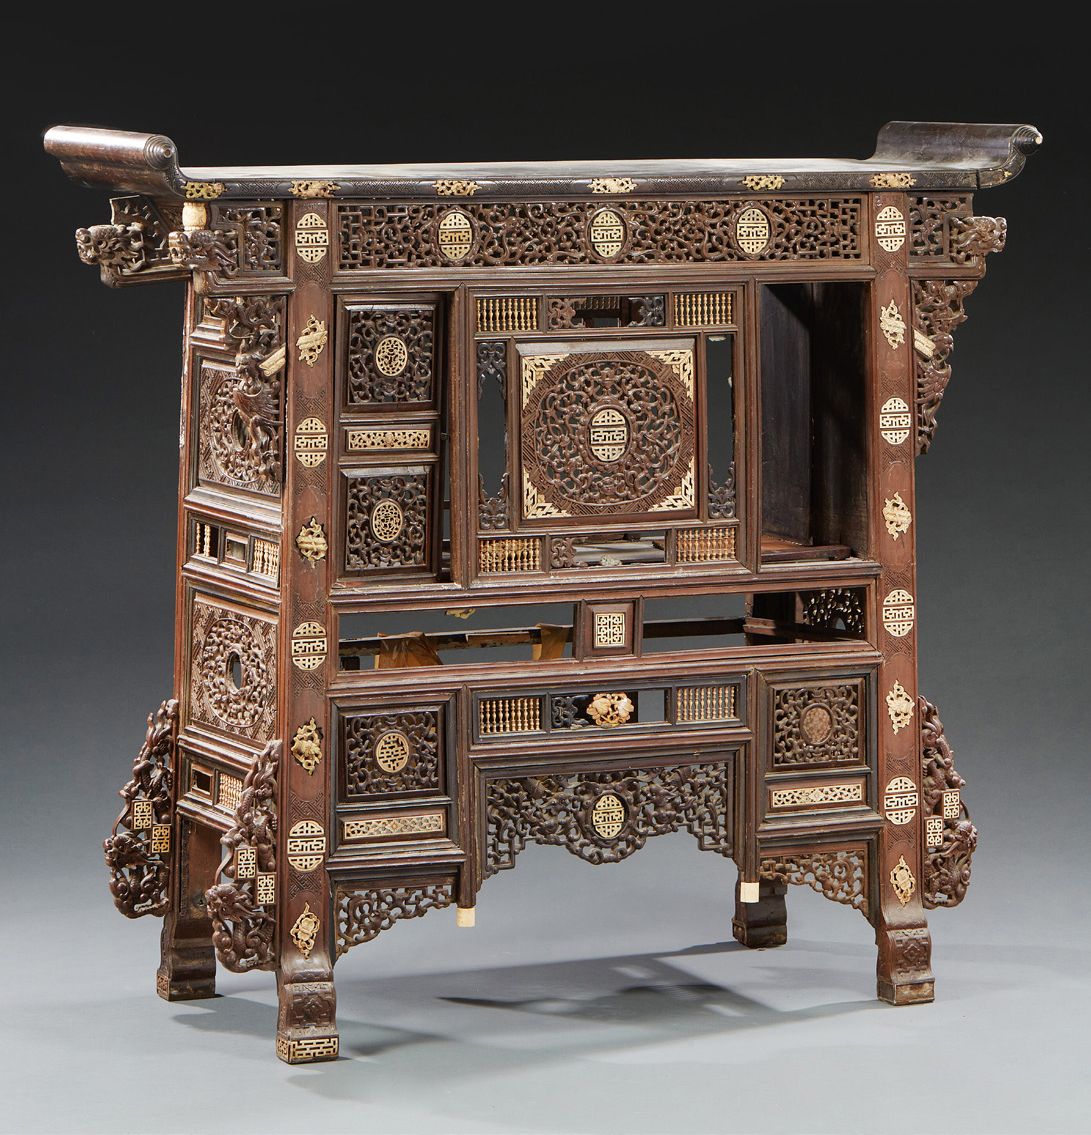 CHINE 雕花木柜，镂空，嵌有珍珠母。
损坏和丢失的部分。
19世纪末 尺寸：126.5 x 147 x 39 cm